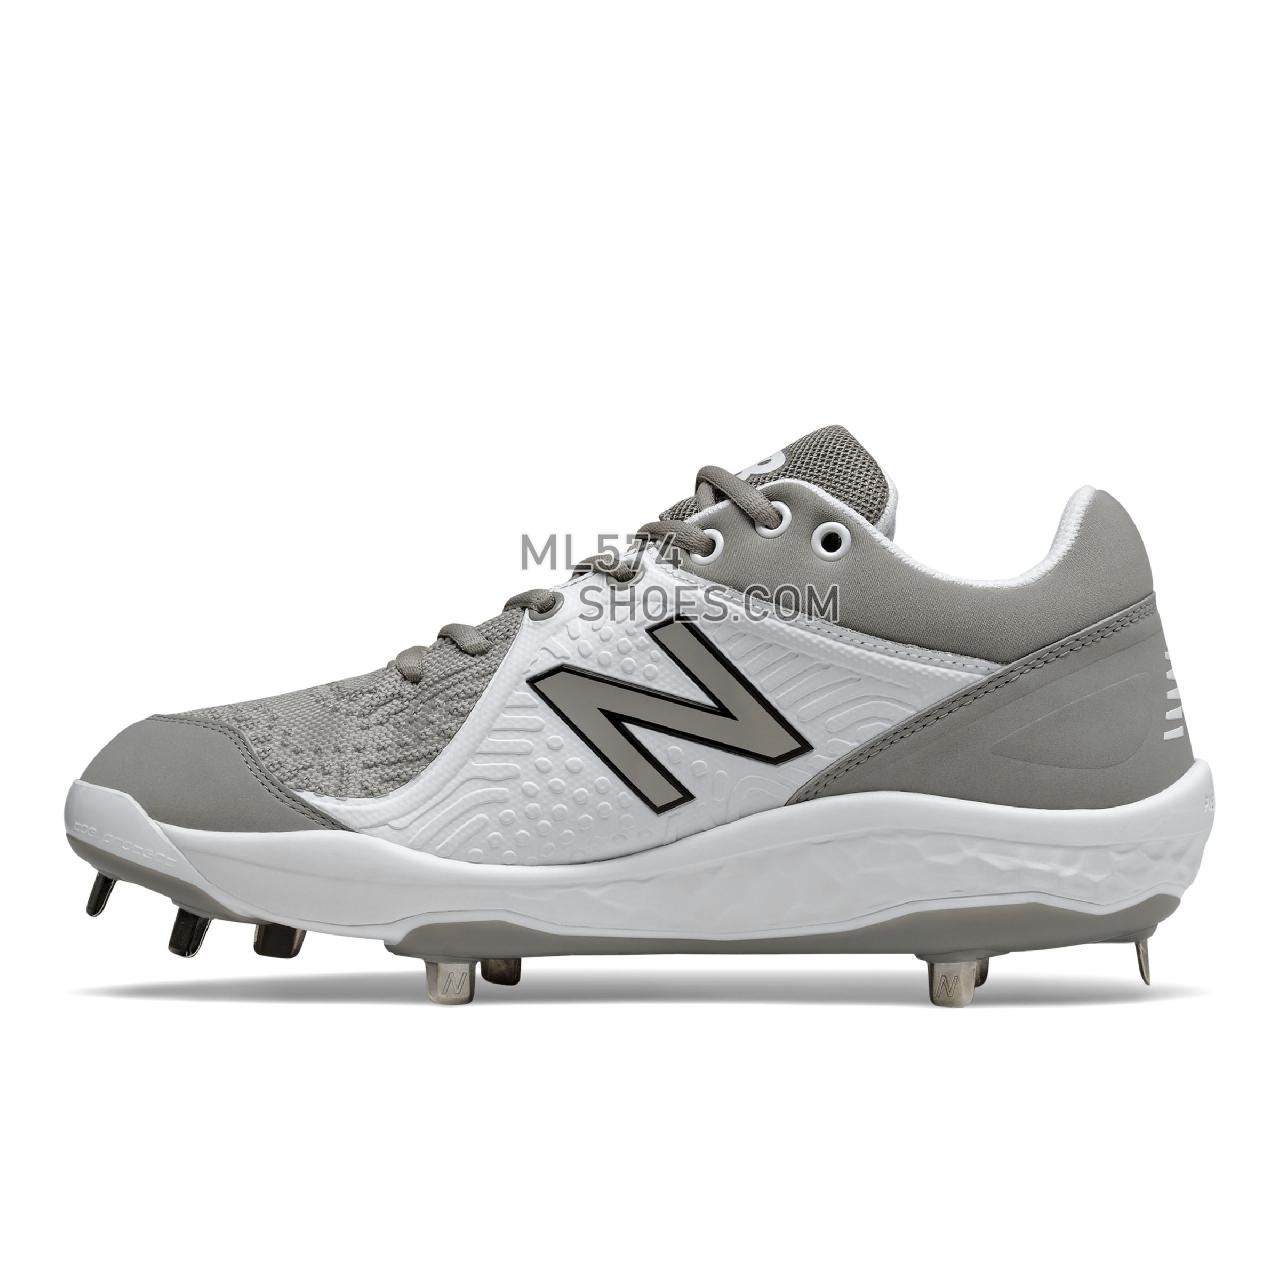 New Balance Fresh Foam 3000 v5 Metal - Men's Mid-Cut Baseball Cleats - Grey with White - L3000TG5